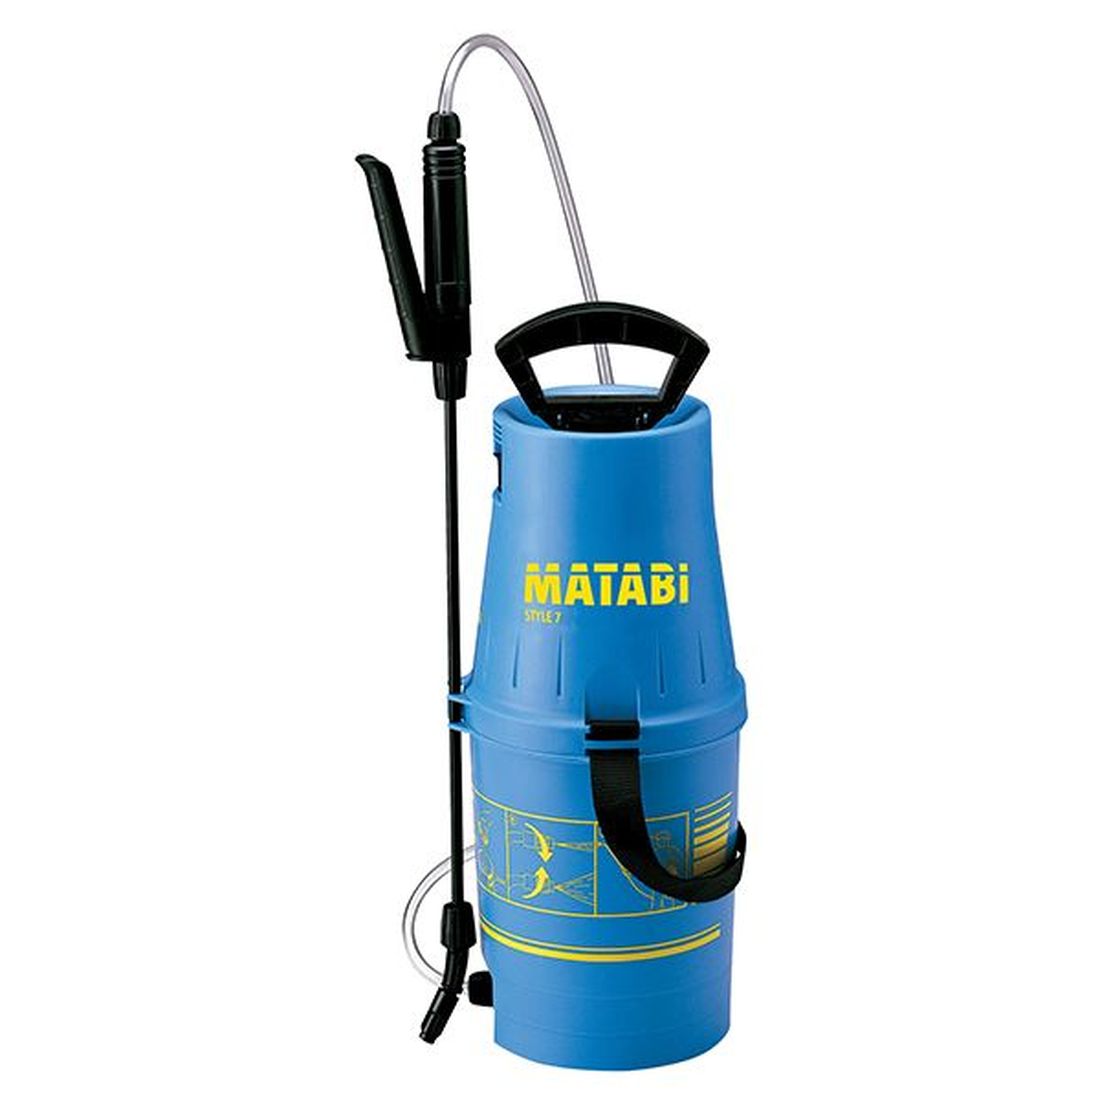 Matabi Style 7 Sprayer 5 litre           